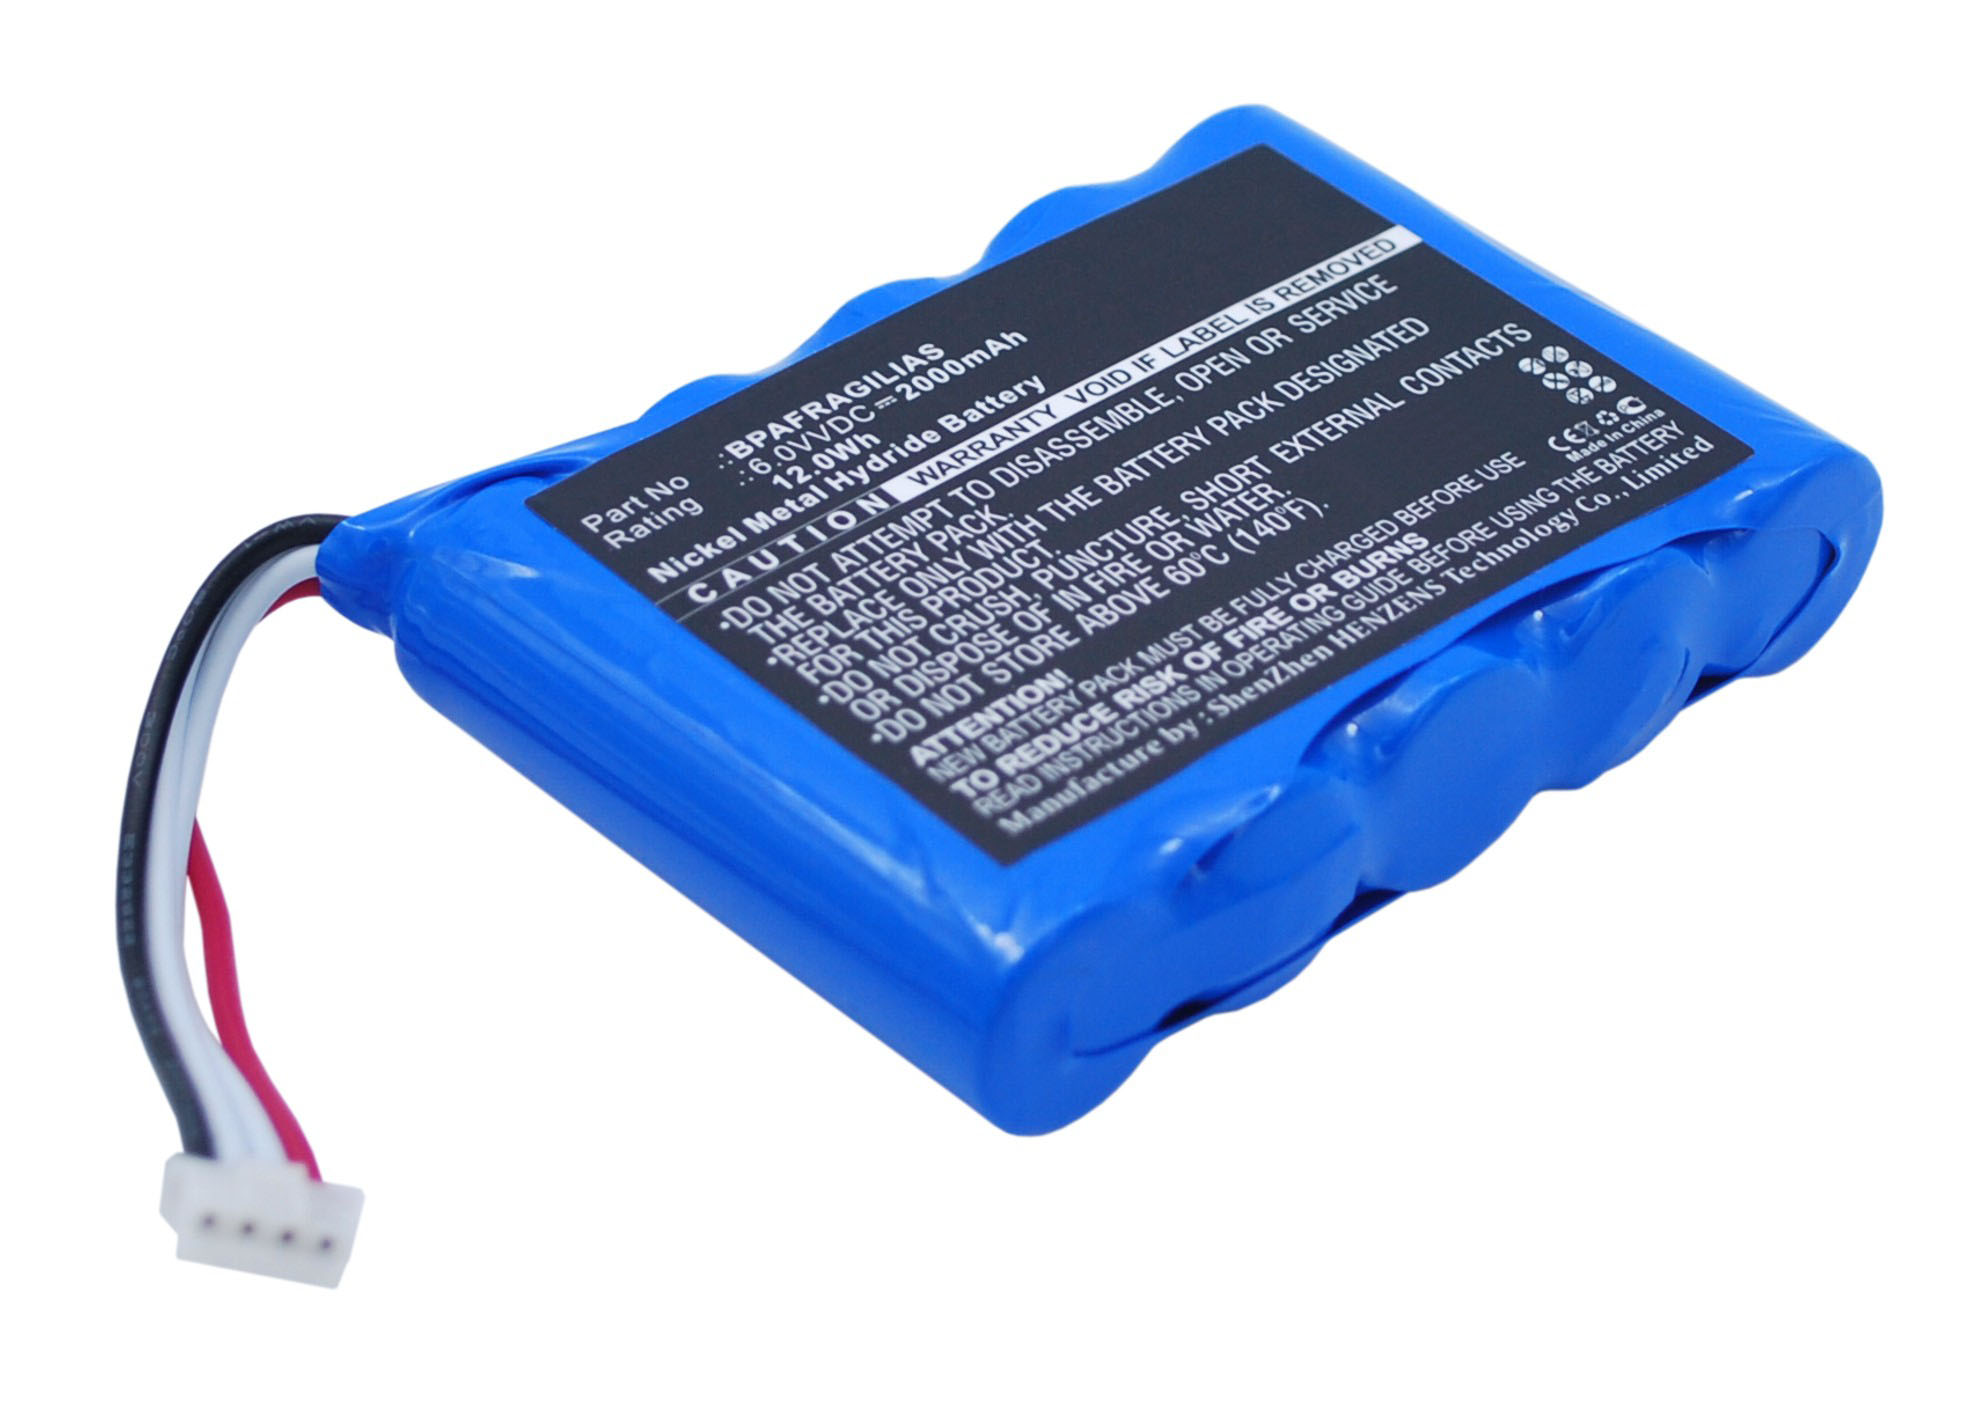 Synergy Digital Medical Battery, Compatible with Fresenius 99178130, BPAFRAGILIAS, MB3639, MB3639-O Medical Battery (6V, Ni-MH, 2000mAh)